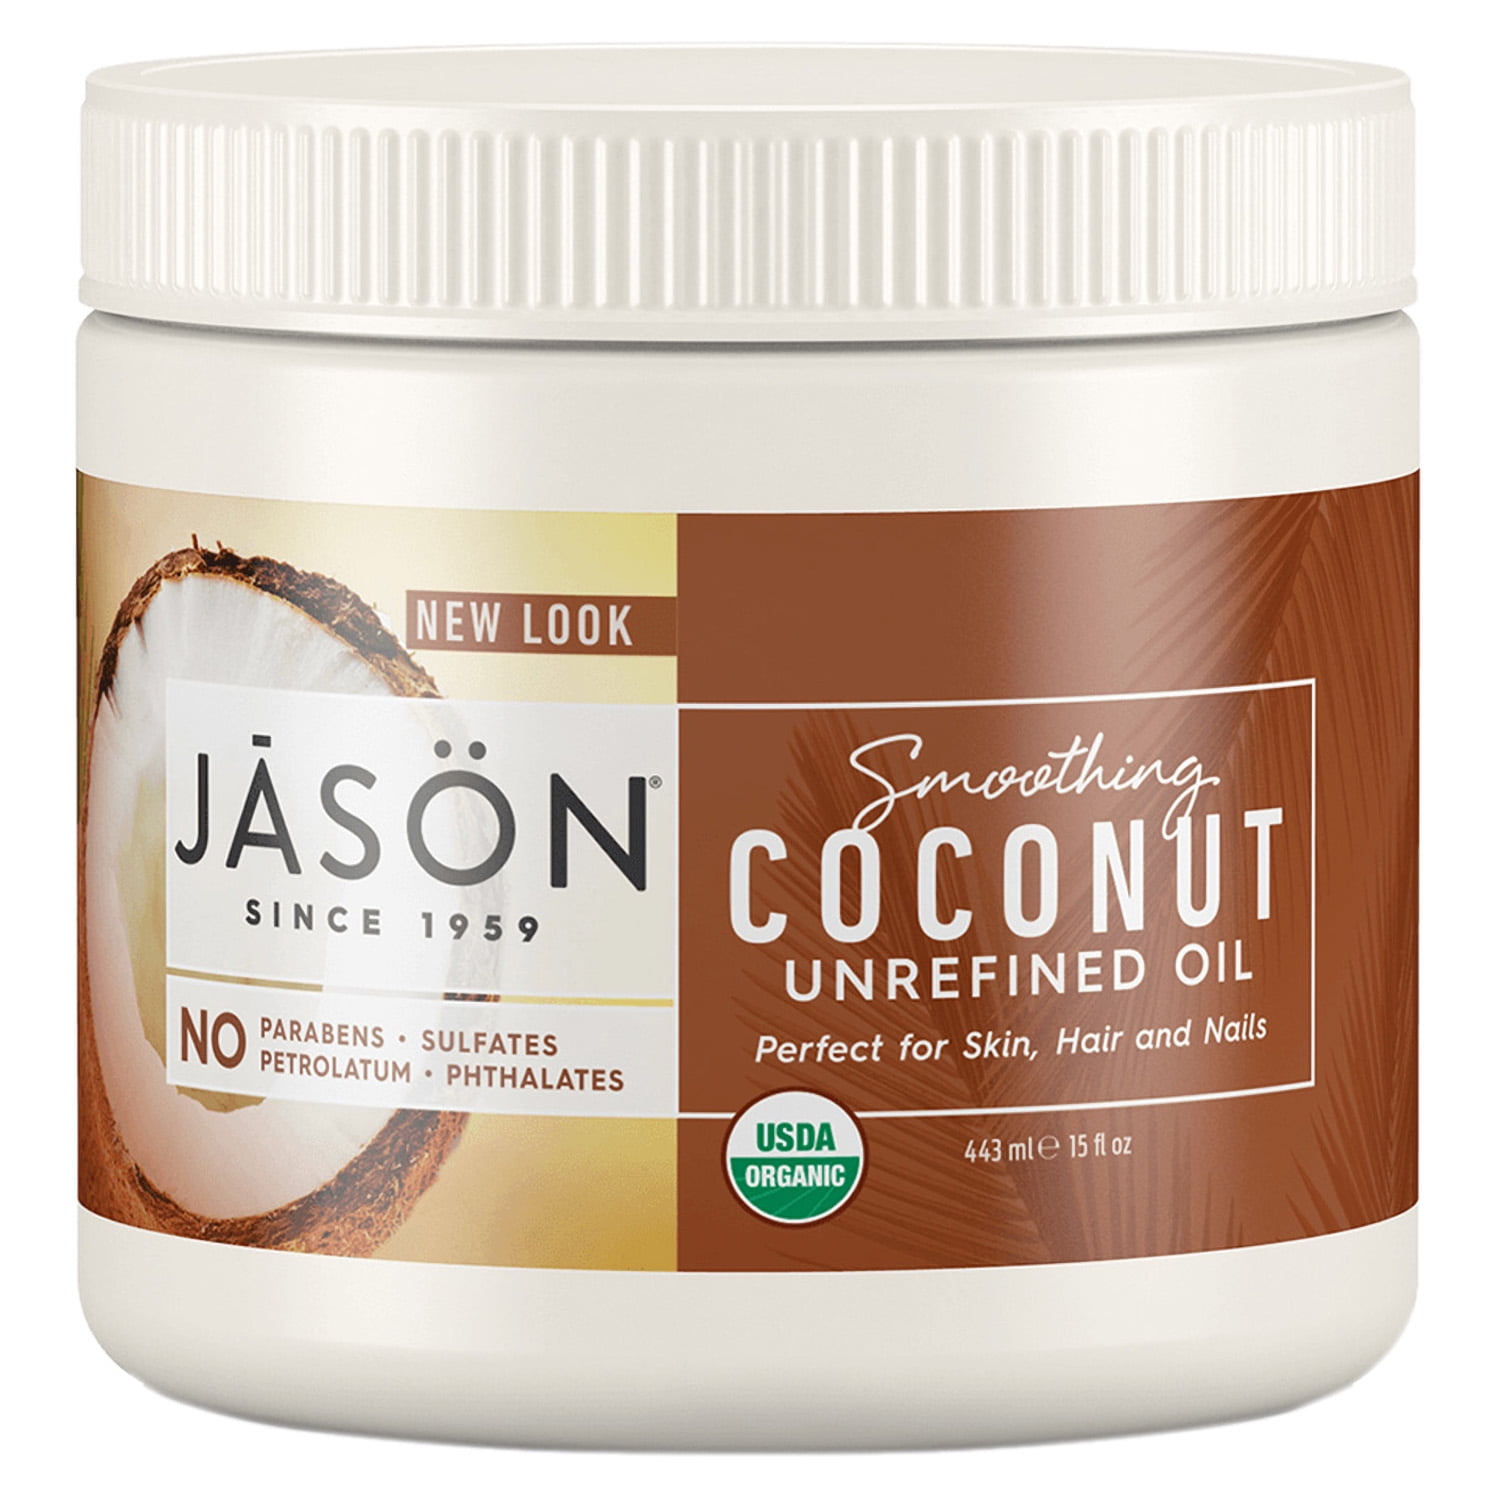 Jason Organic Smoothing Unrefined Coconut Oil, 15 fl oz